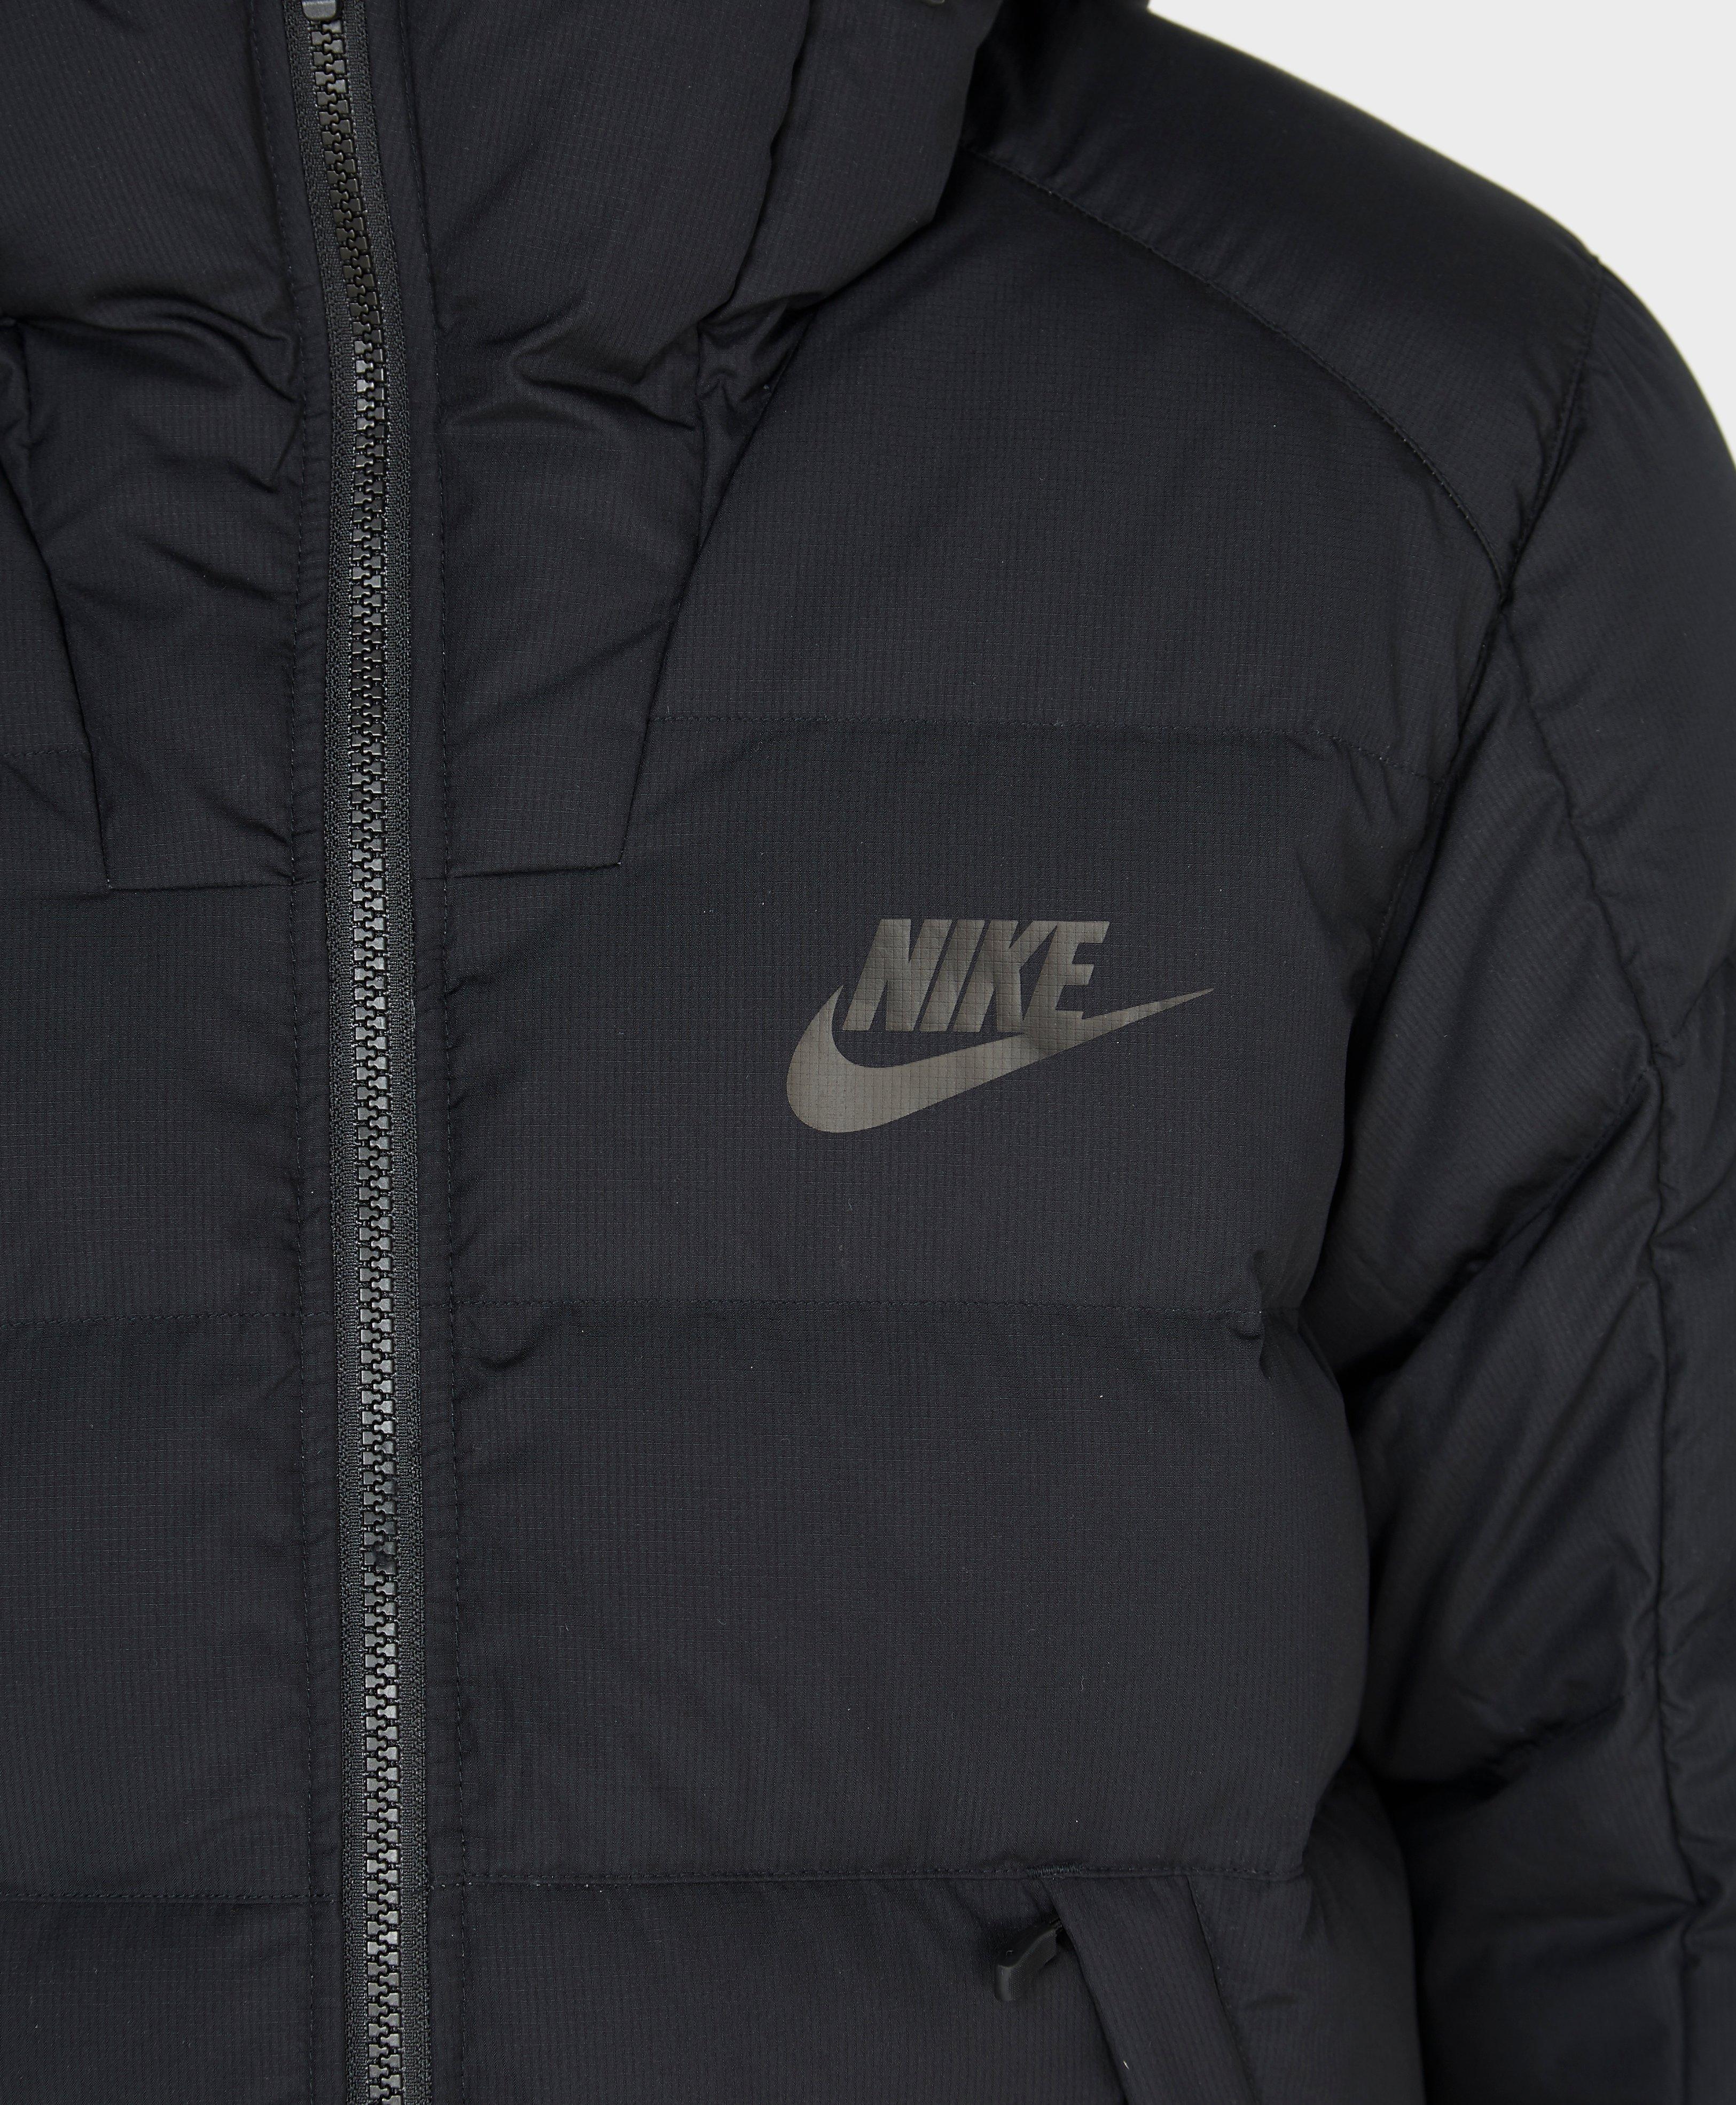 Nike Padded Down Jacket in Black for Men - Lyst